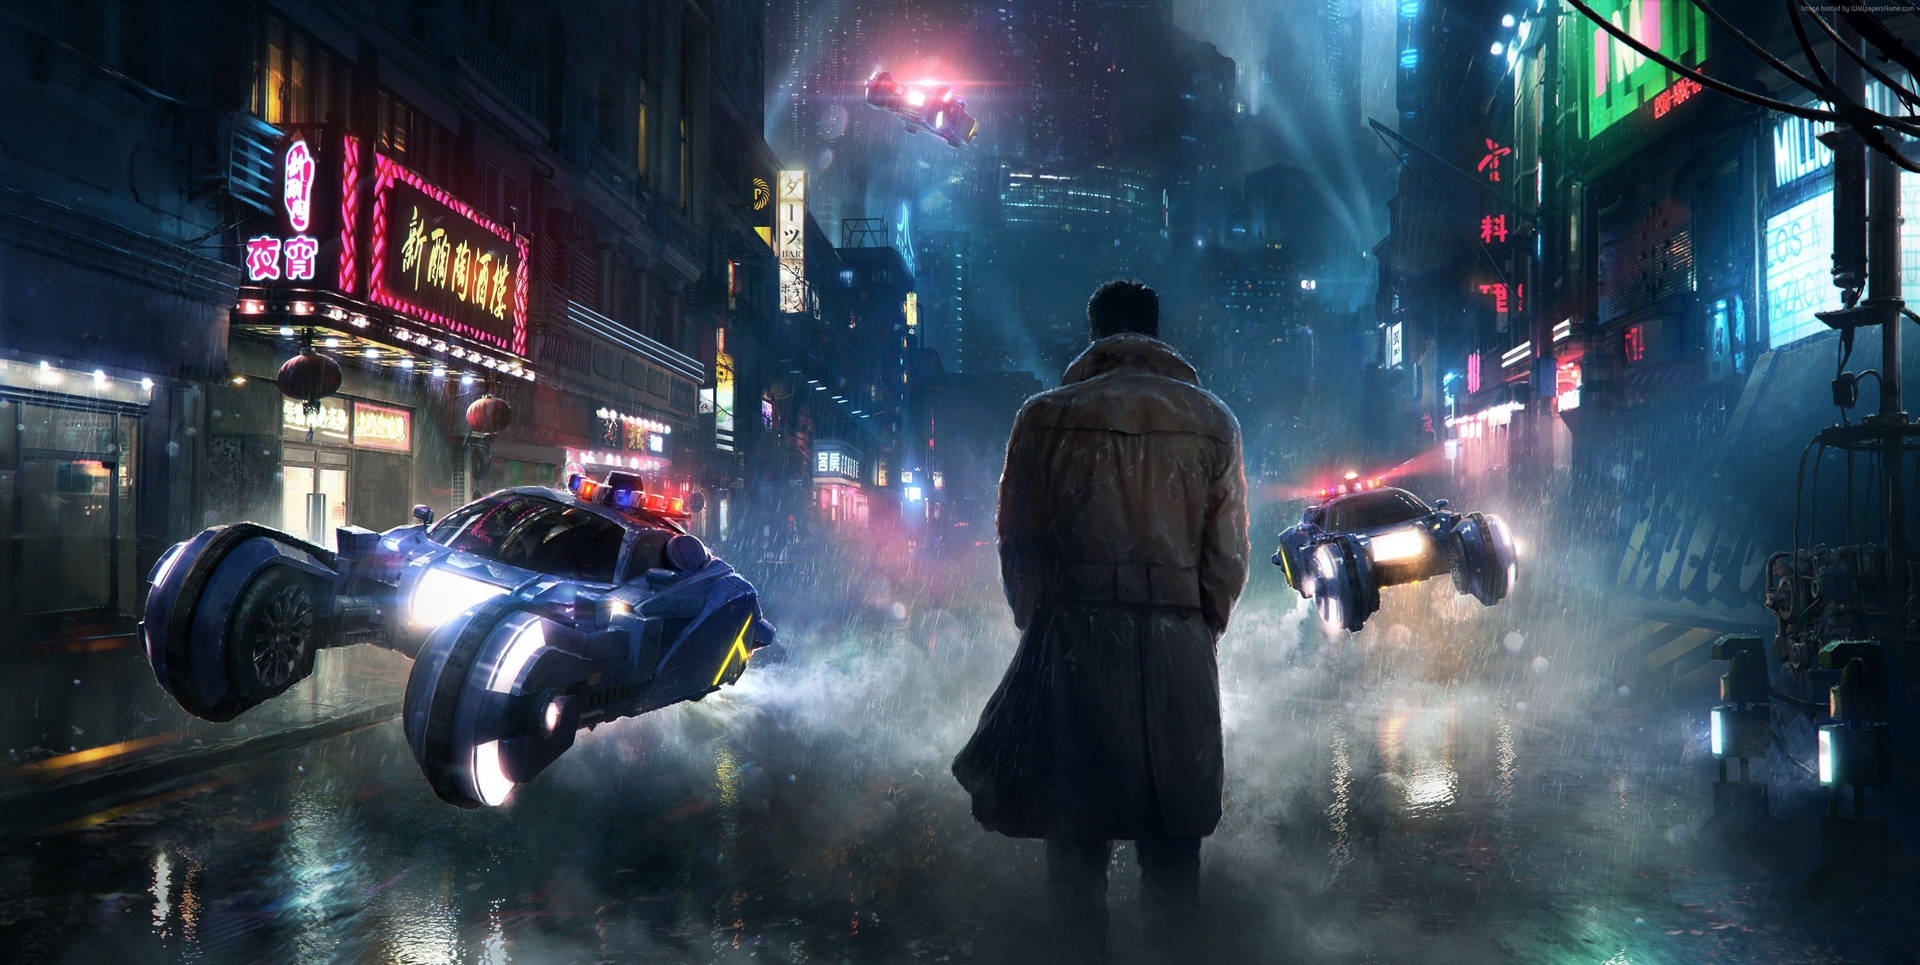 Blade Runner Background